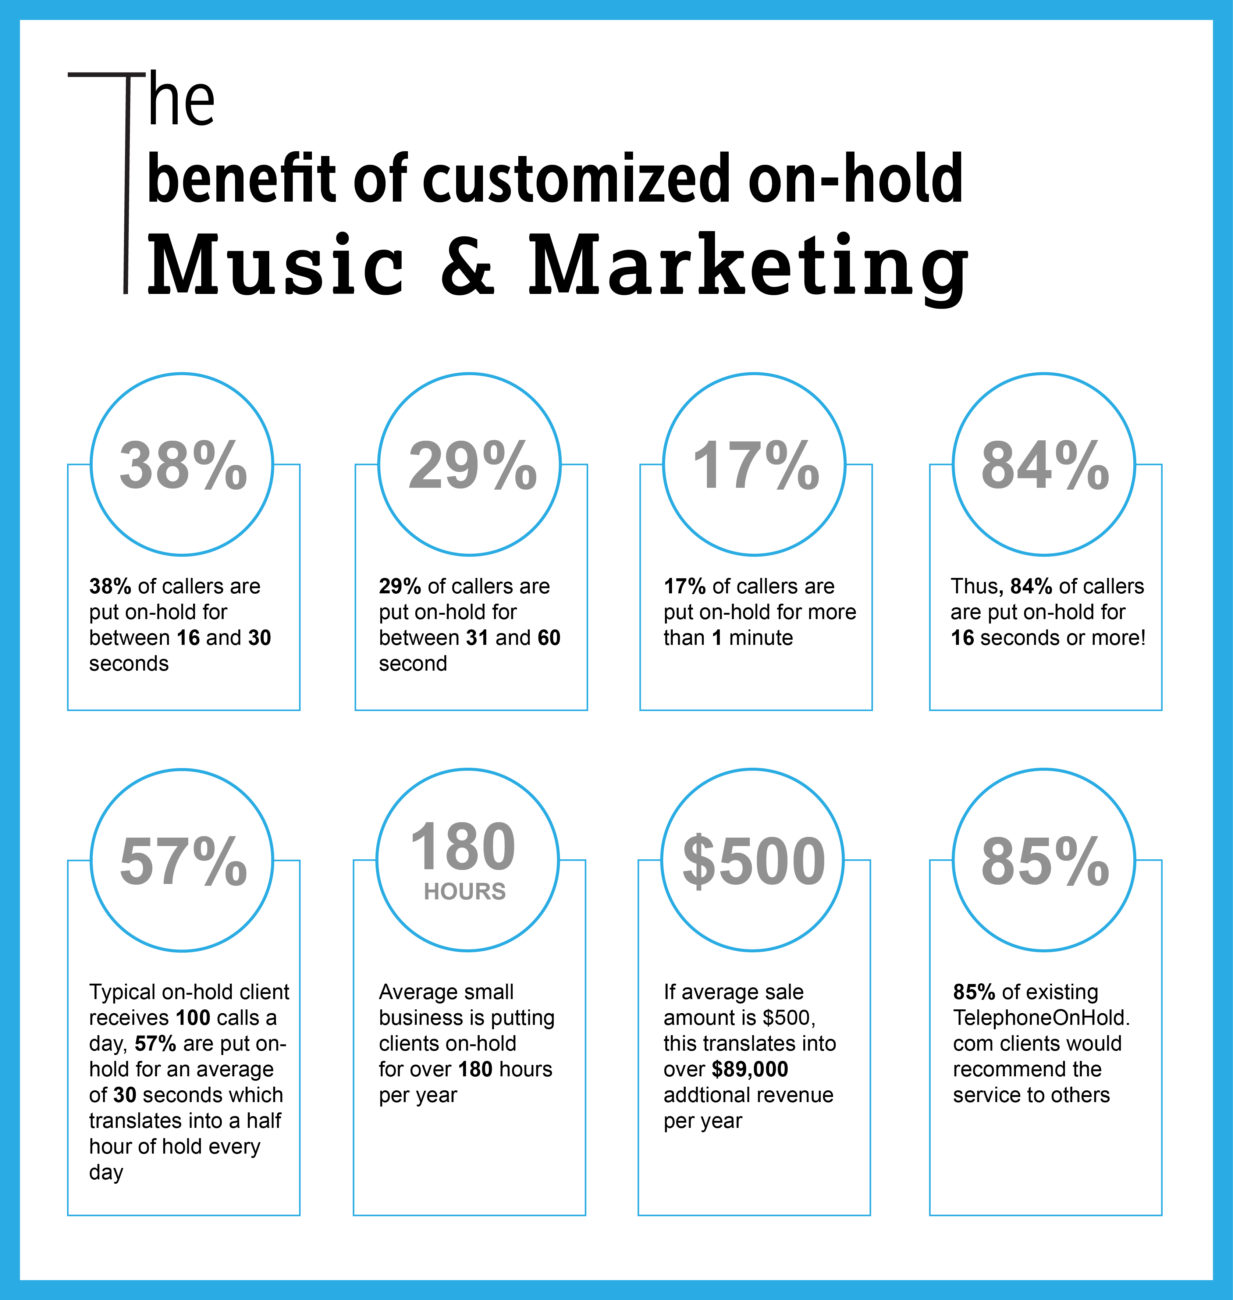 On hold Music & Marketing